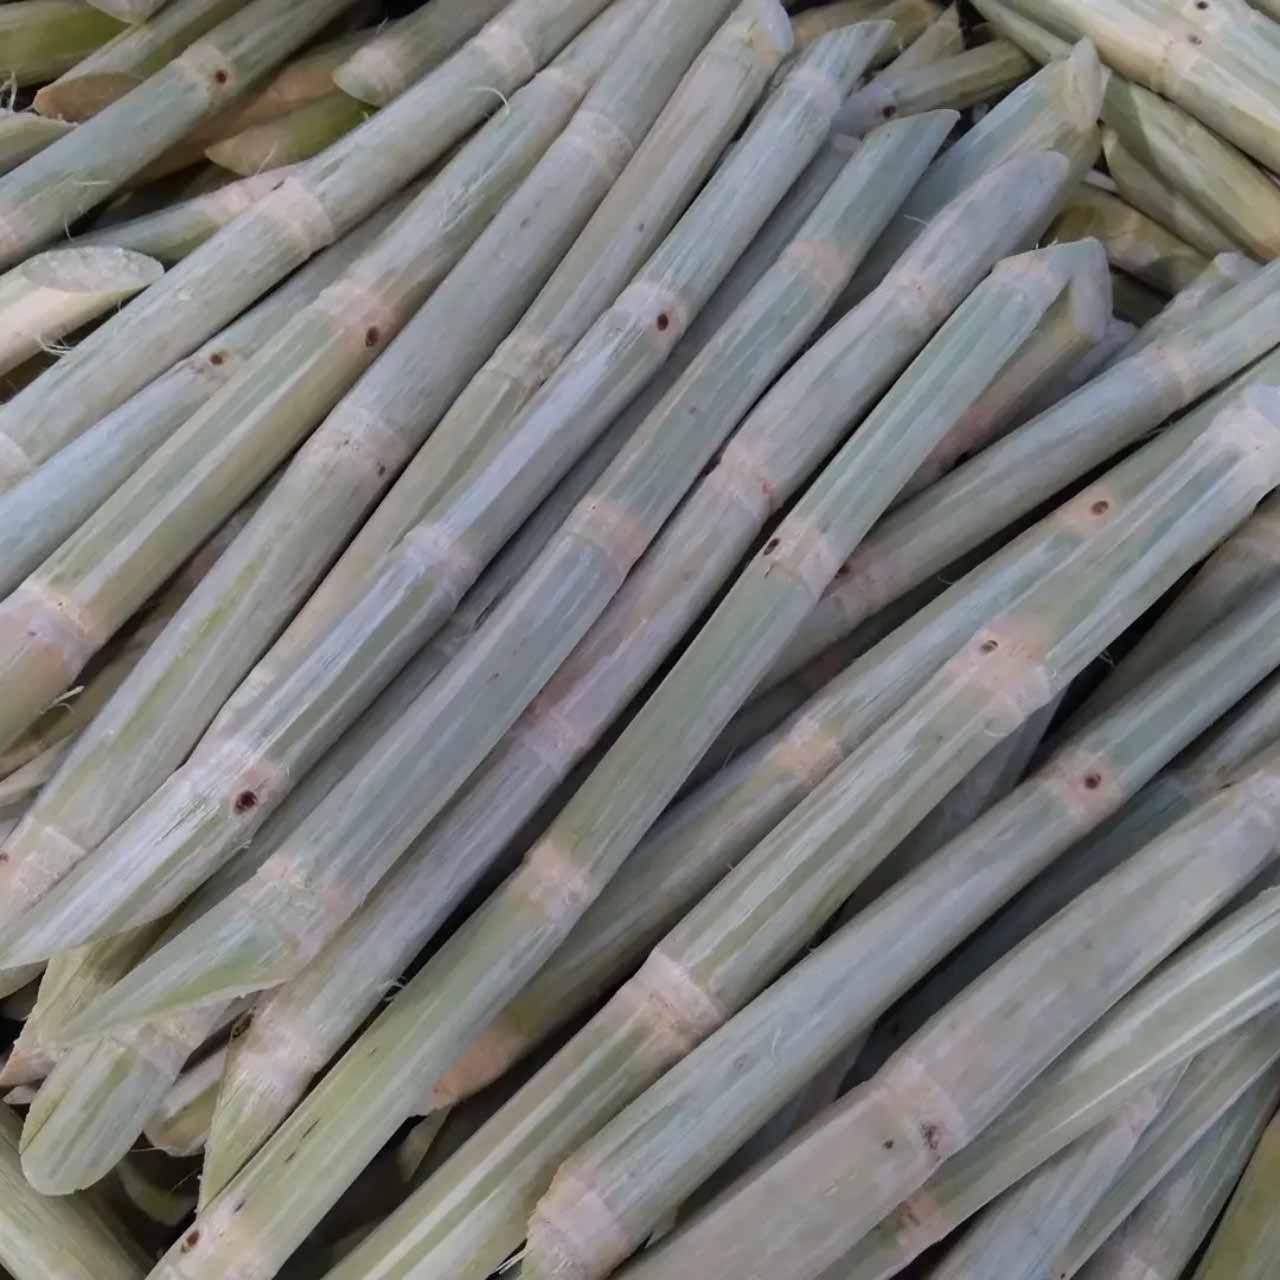 Conventional sugar cane stalks having buds